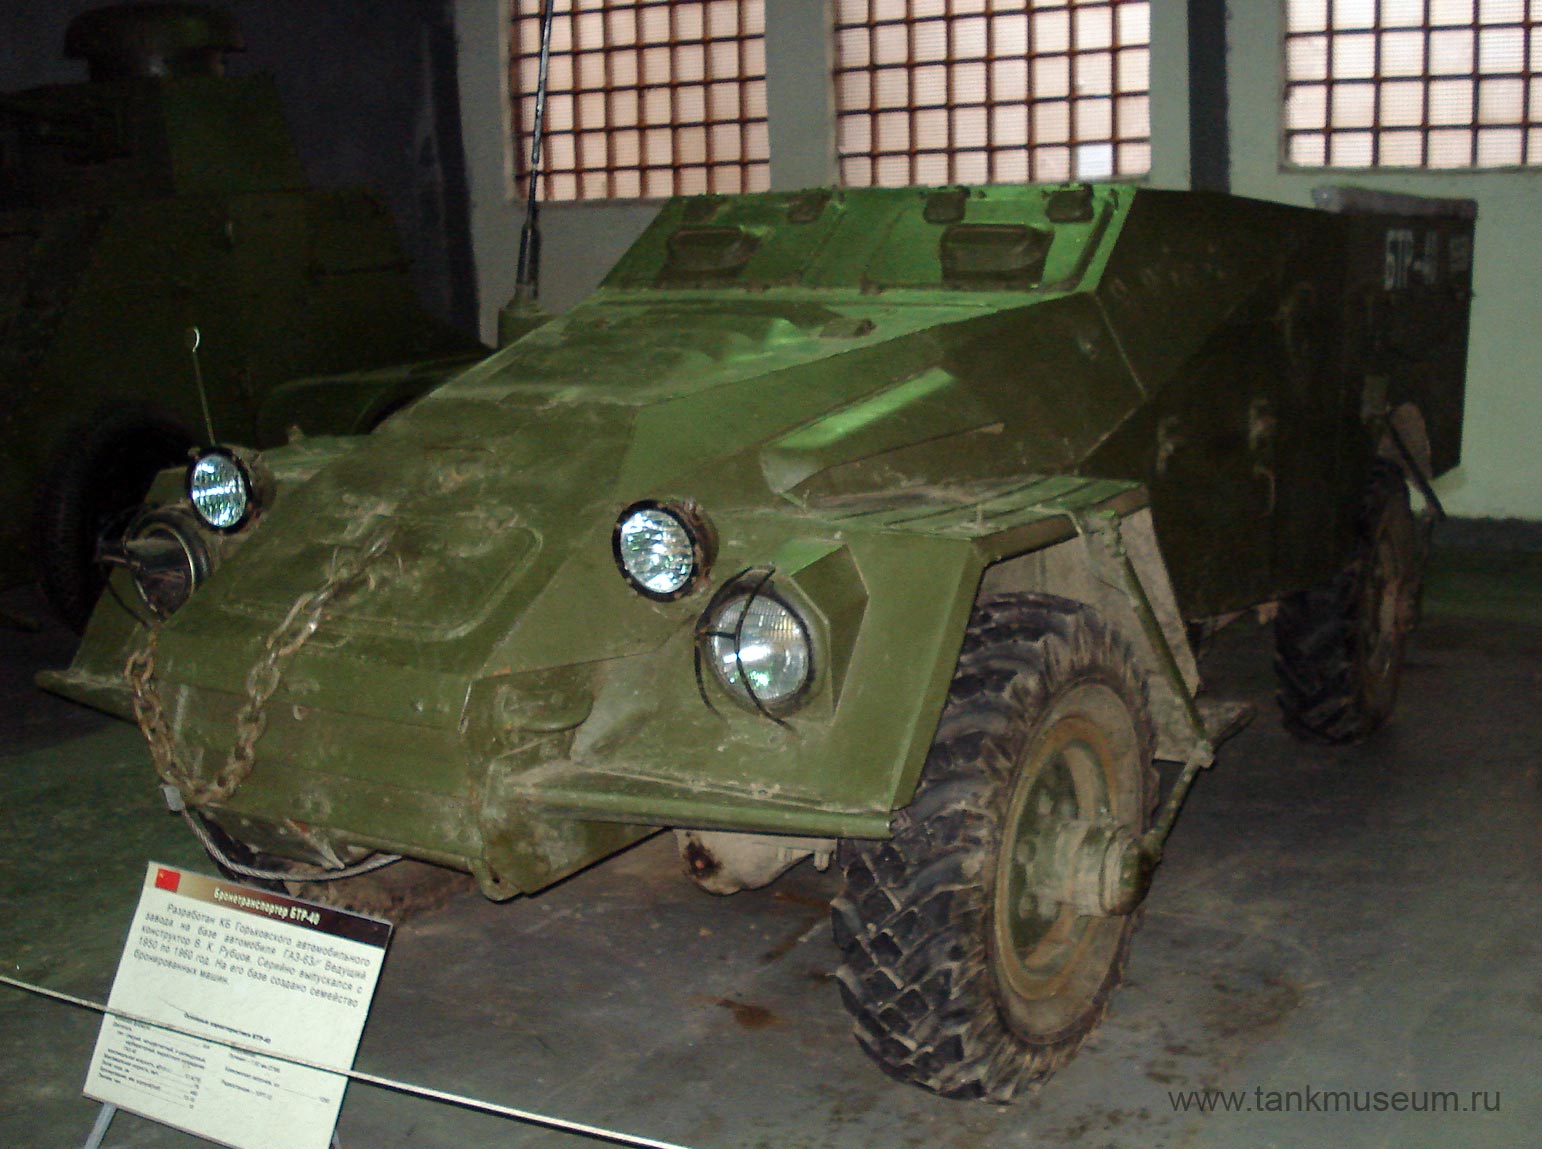 Kubinka tank museum armored personnel carrier BTR-40